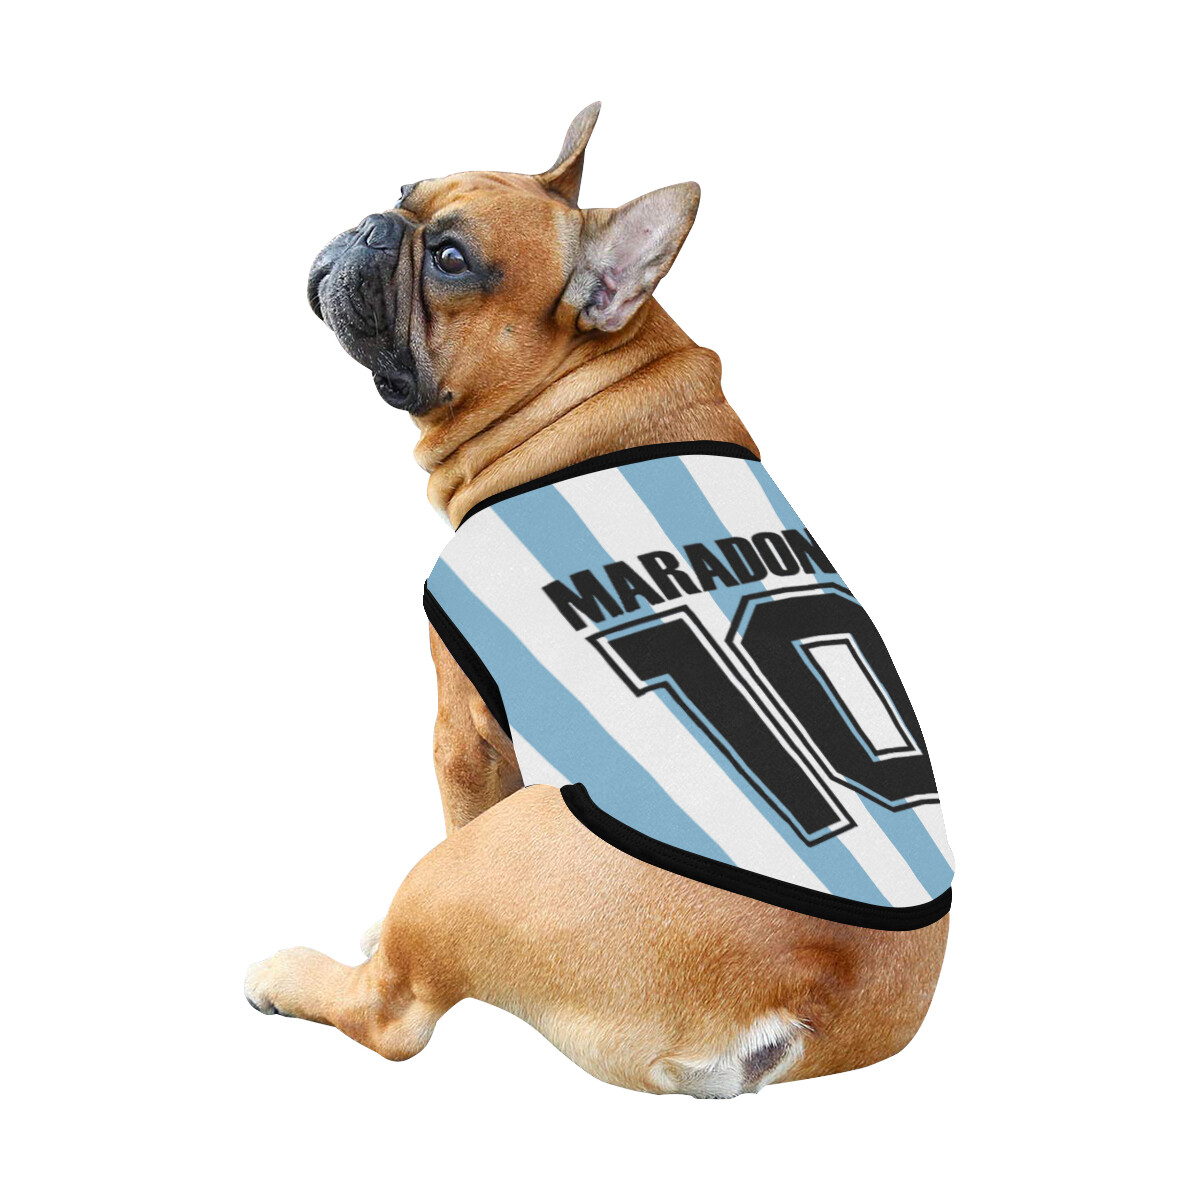 🐕 ⚽️ Argentina, Soccer Team, Diego Maradona, 10, Dog t-shirt, Dog Tank Top, Dog shirt, Dog clothes, Dog jersey, Gift, 7 sizes XS to 3XL, Argentinean, I love sports